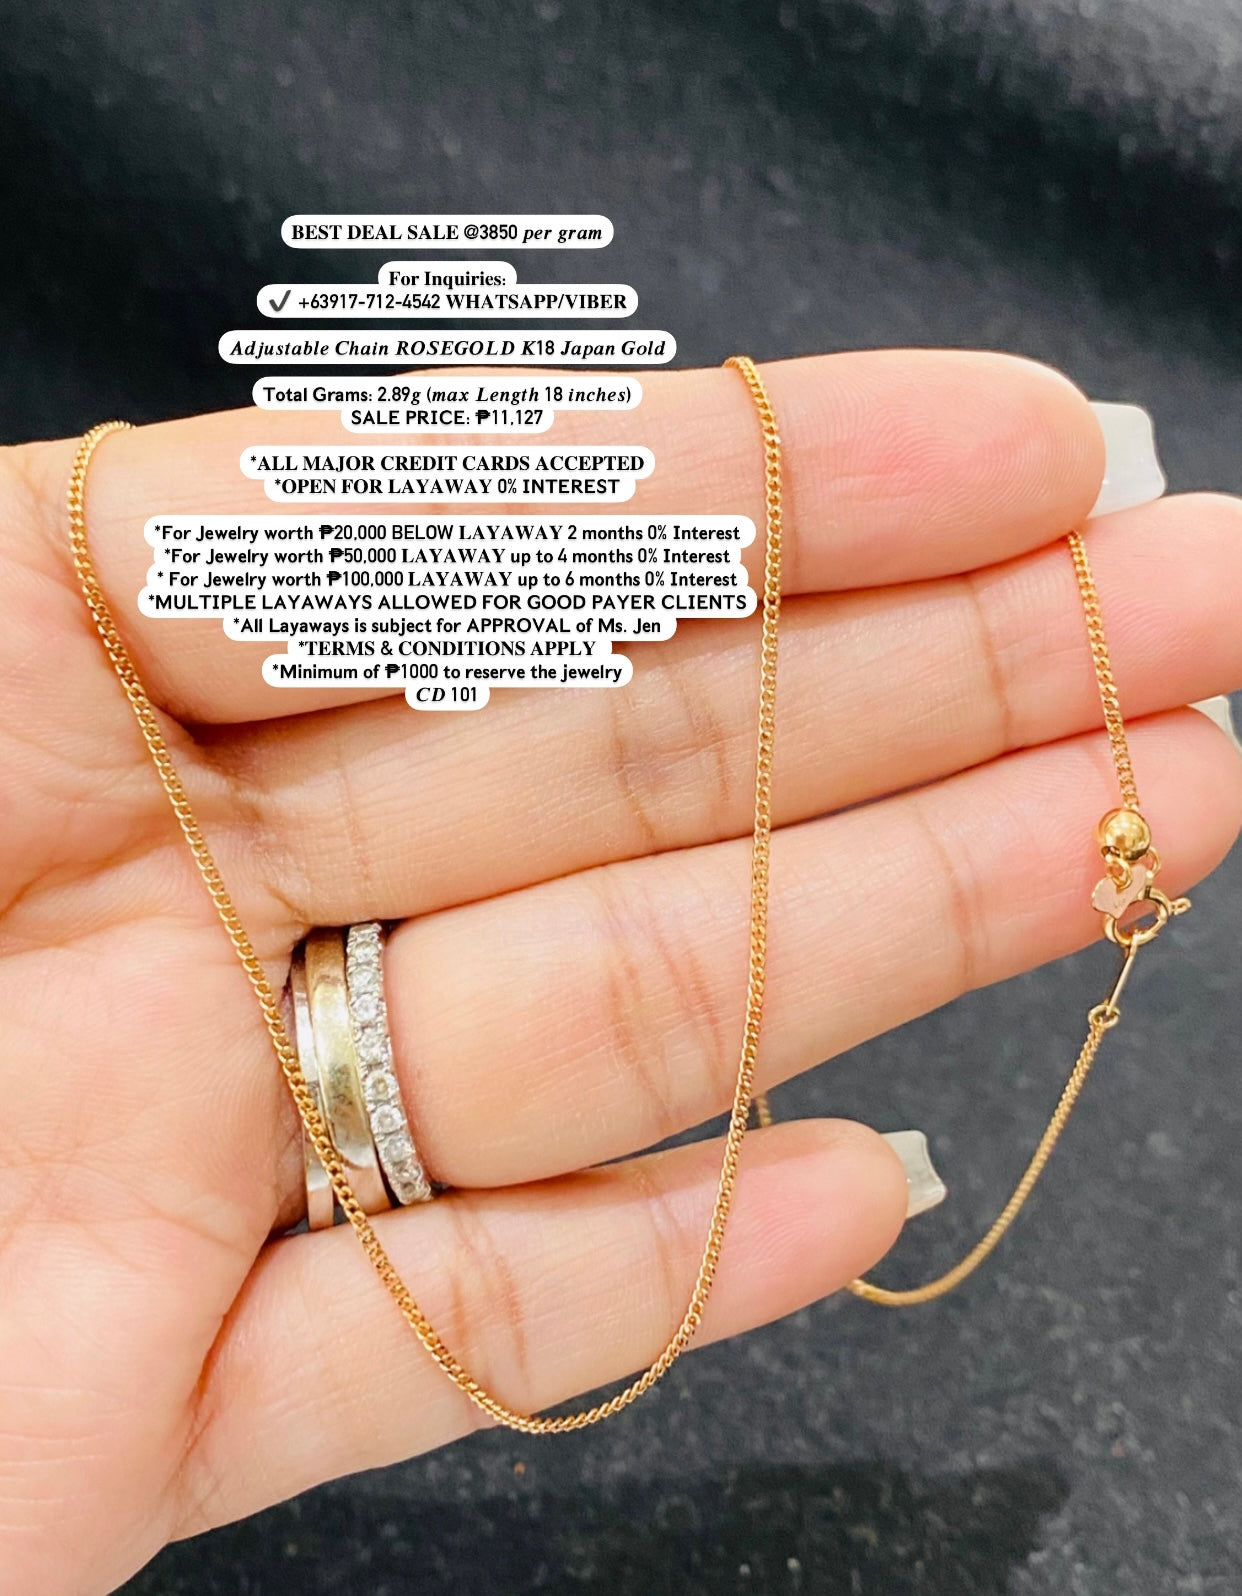 Adjustable ROSEGOLD Chain Necklace K18 Japan Gold (max length 18